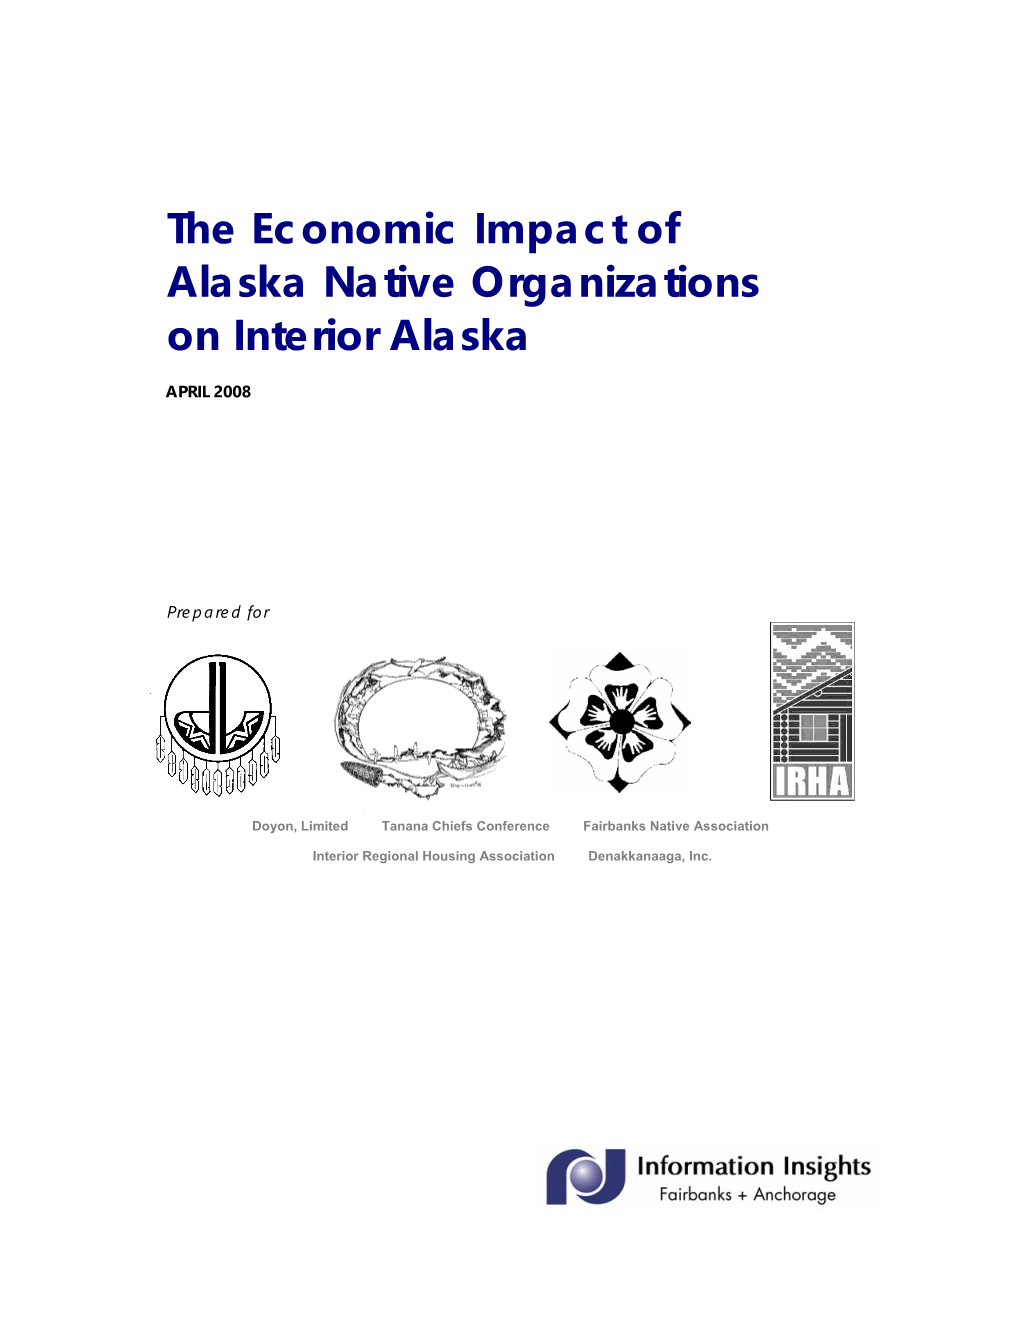 The Economic Impact of Alaska Native Organizations on Interior Alaska